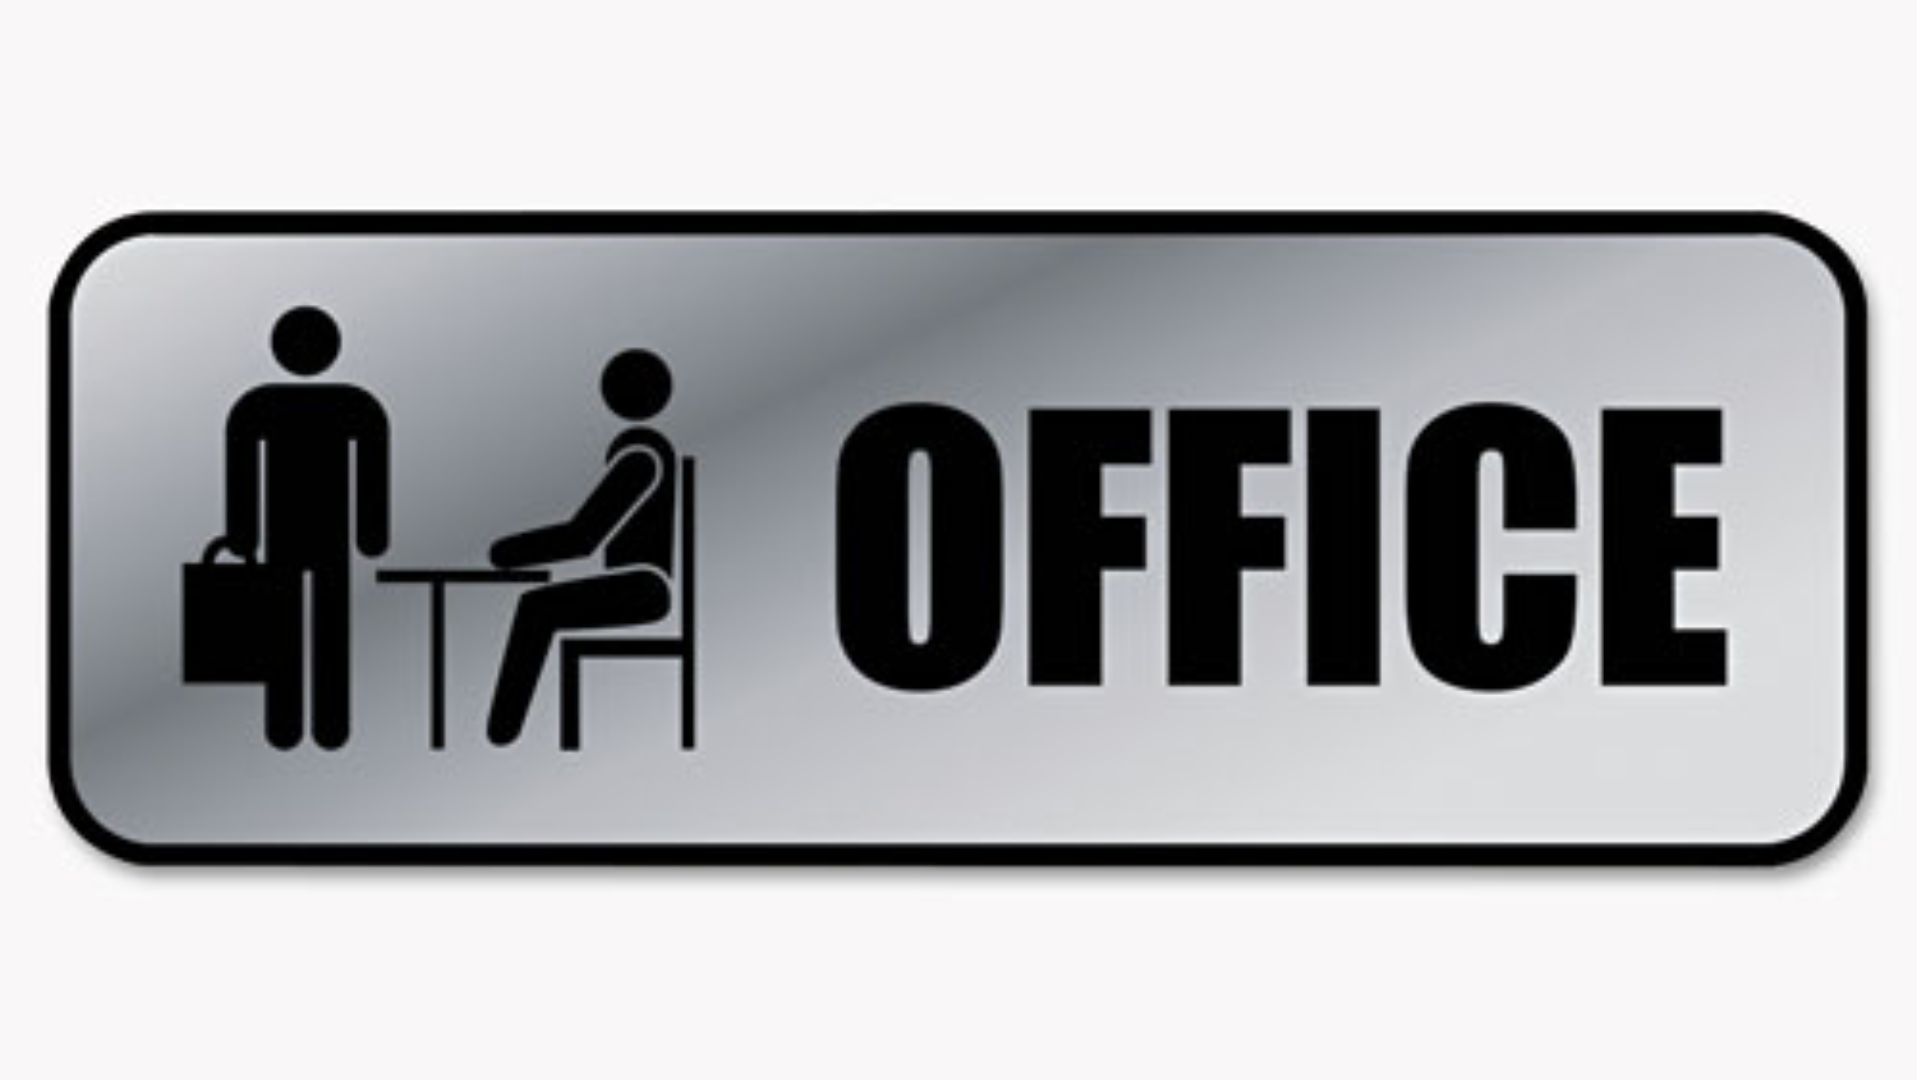 Office Signage Company